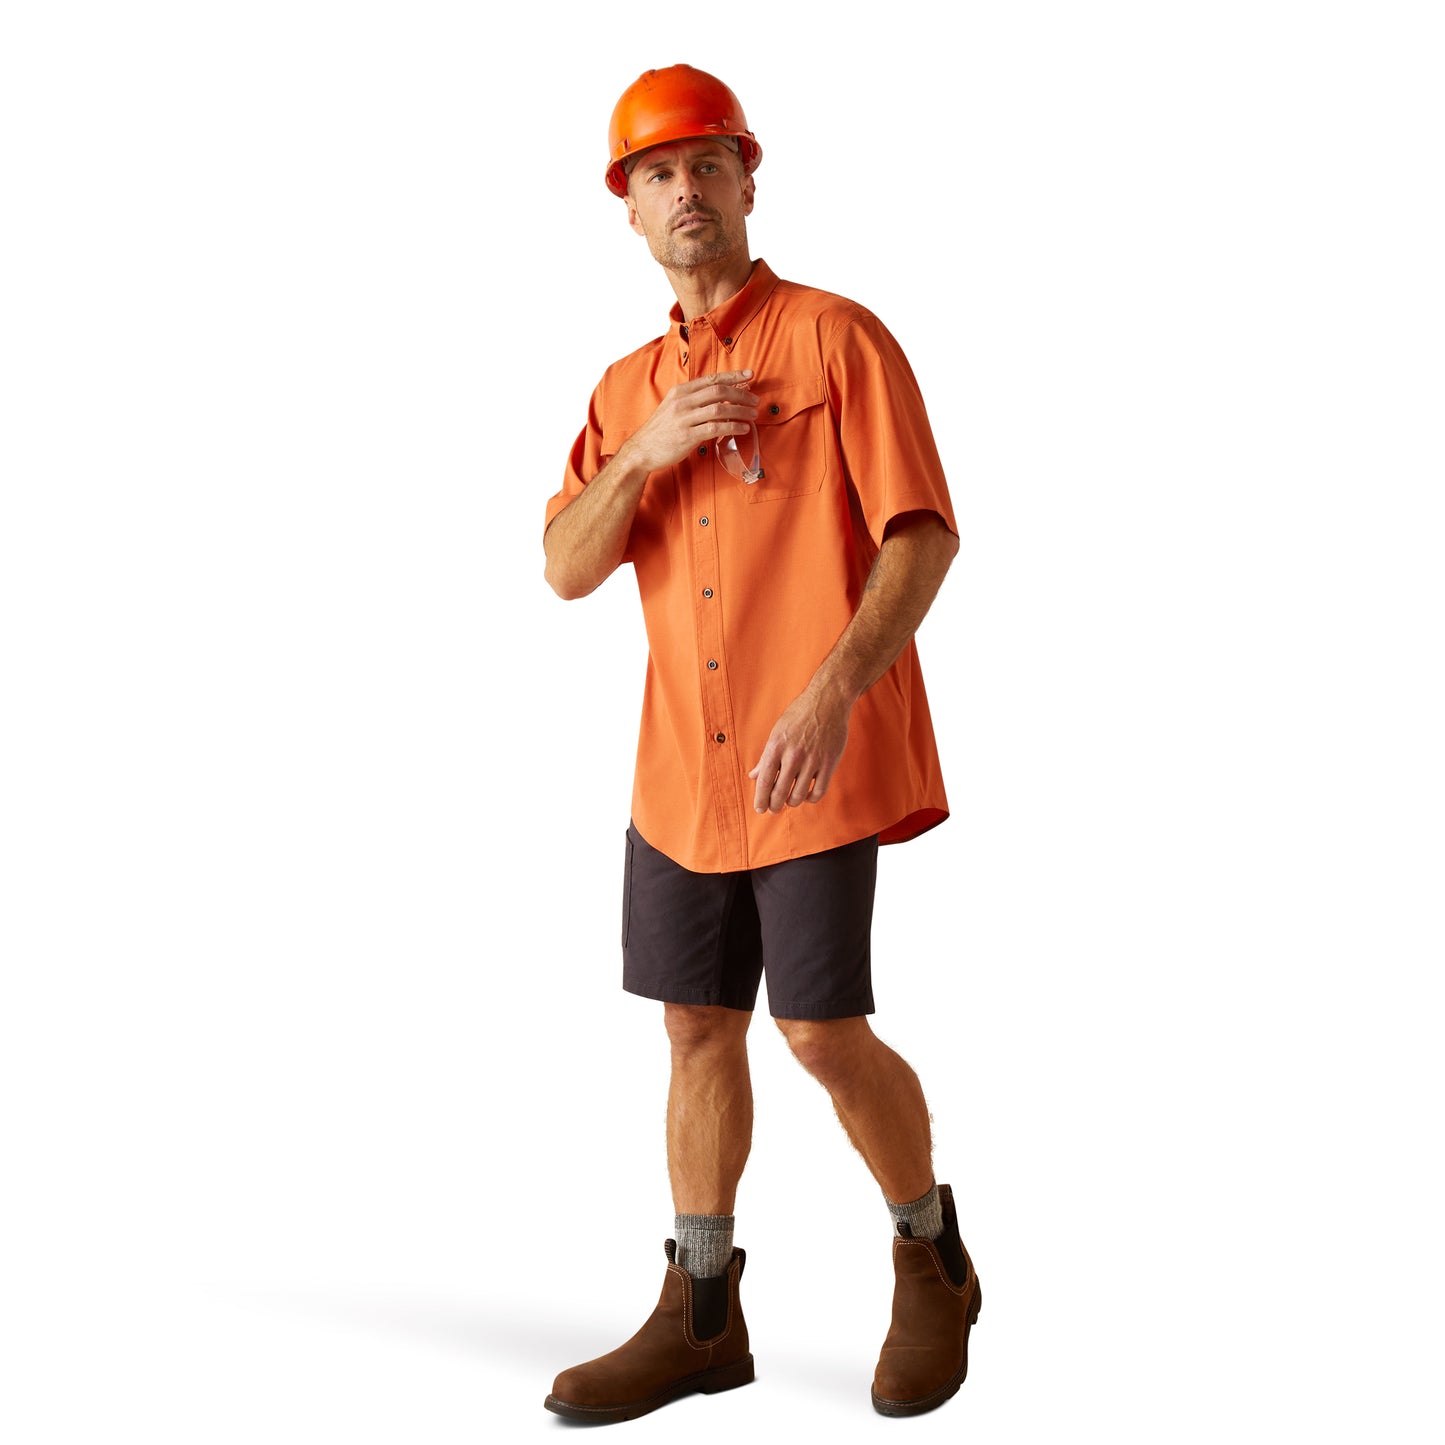 Ariat Men's Rebar Made Tough VentTEK DuraStretch Orange Work Shirt 10048864